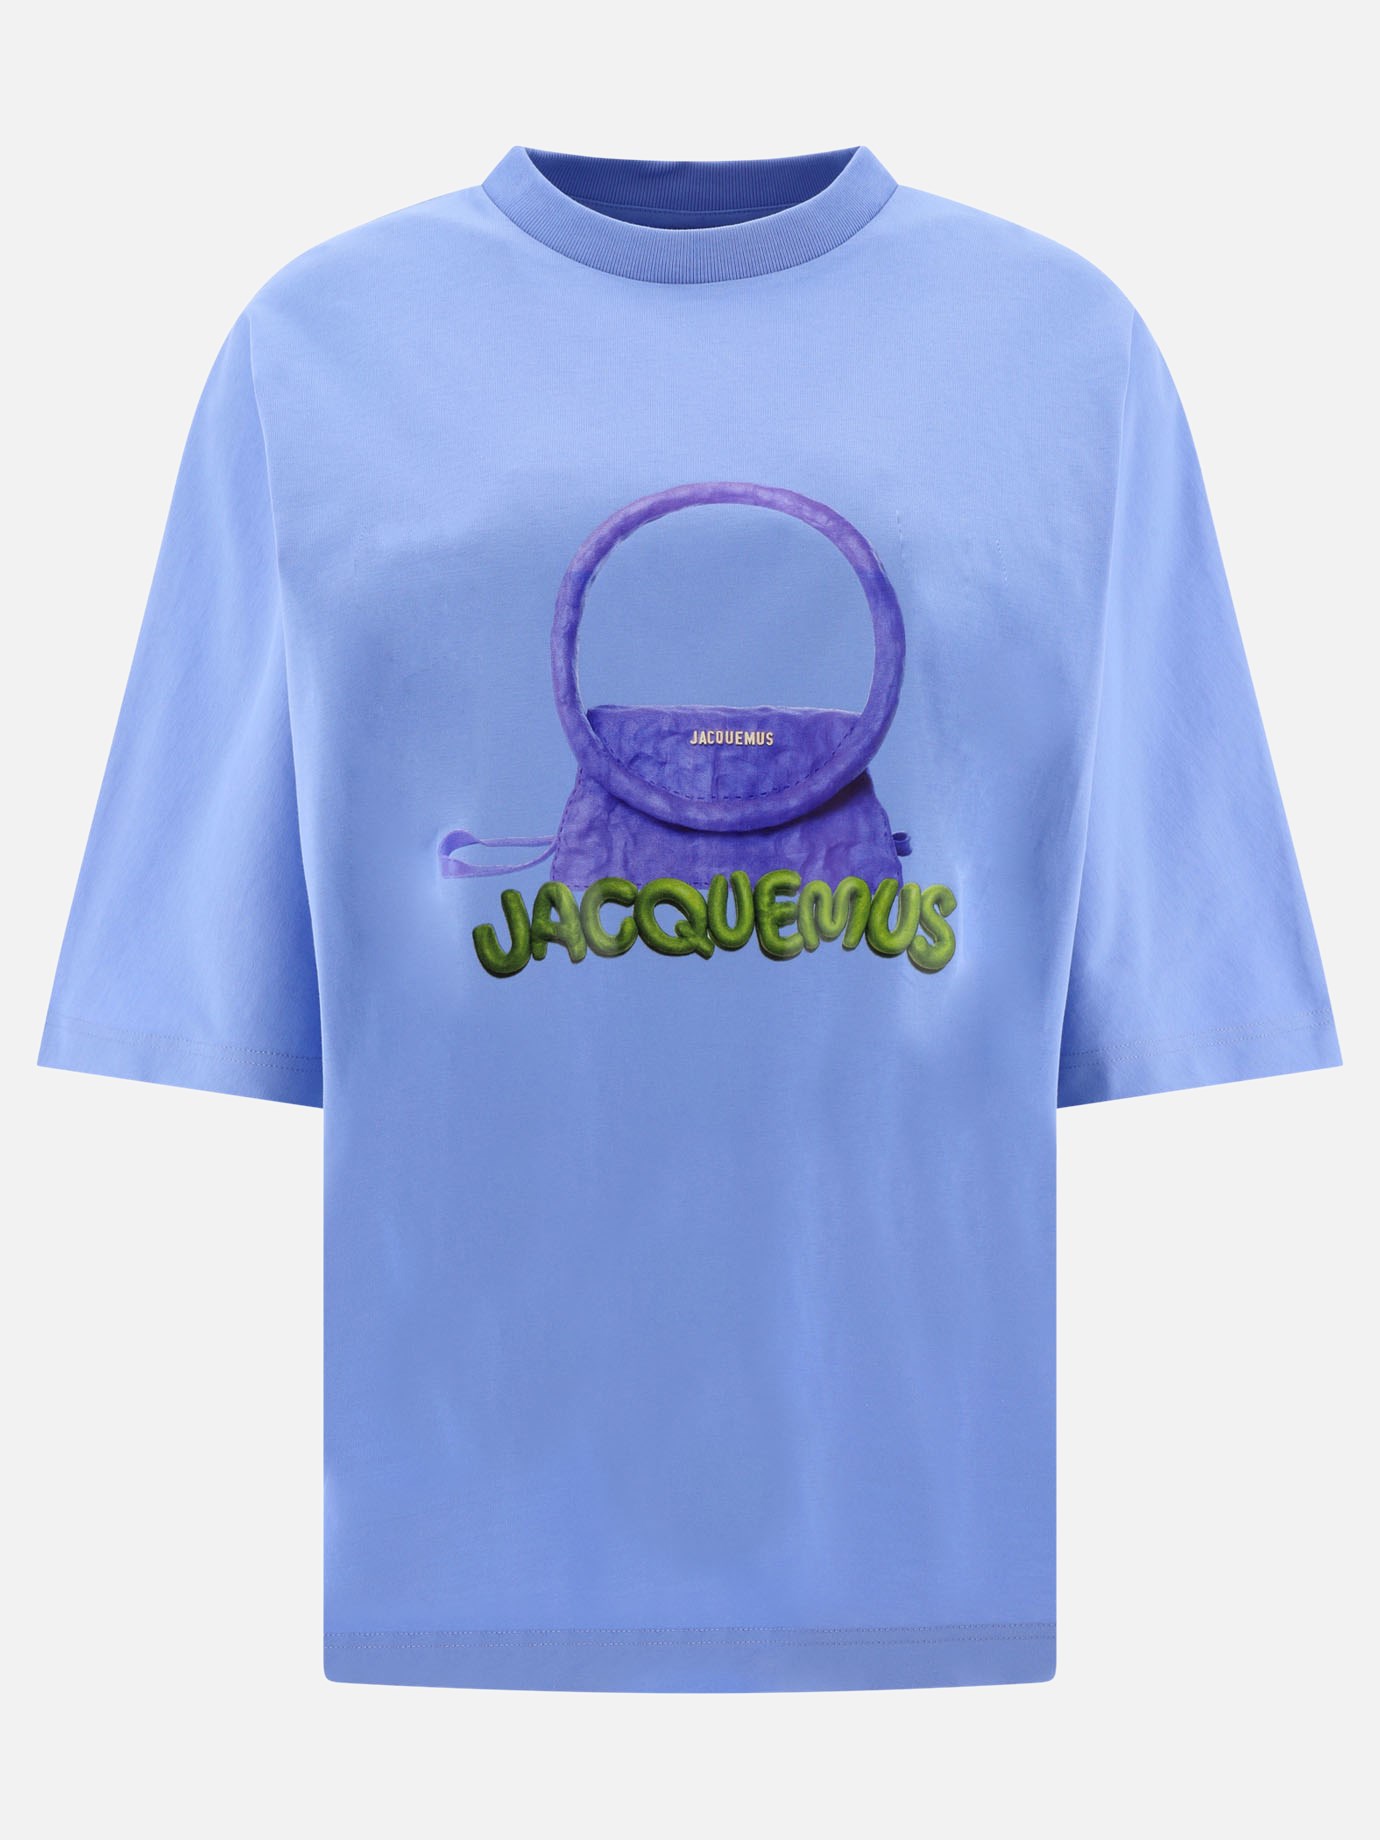  Le T-shirt Sac Rond  t-shirtby Jacquemus - 1